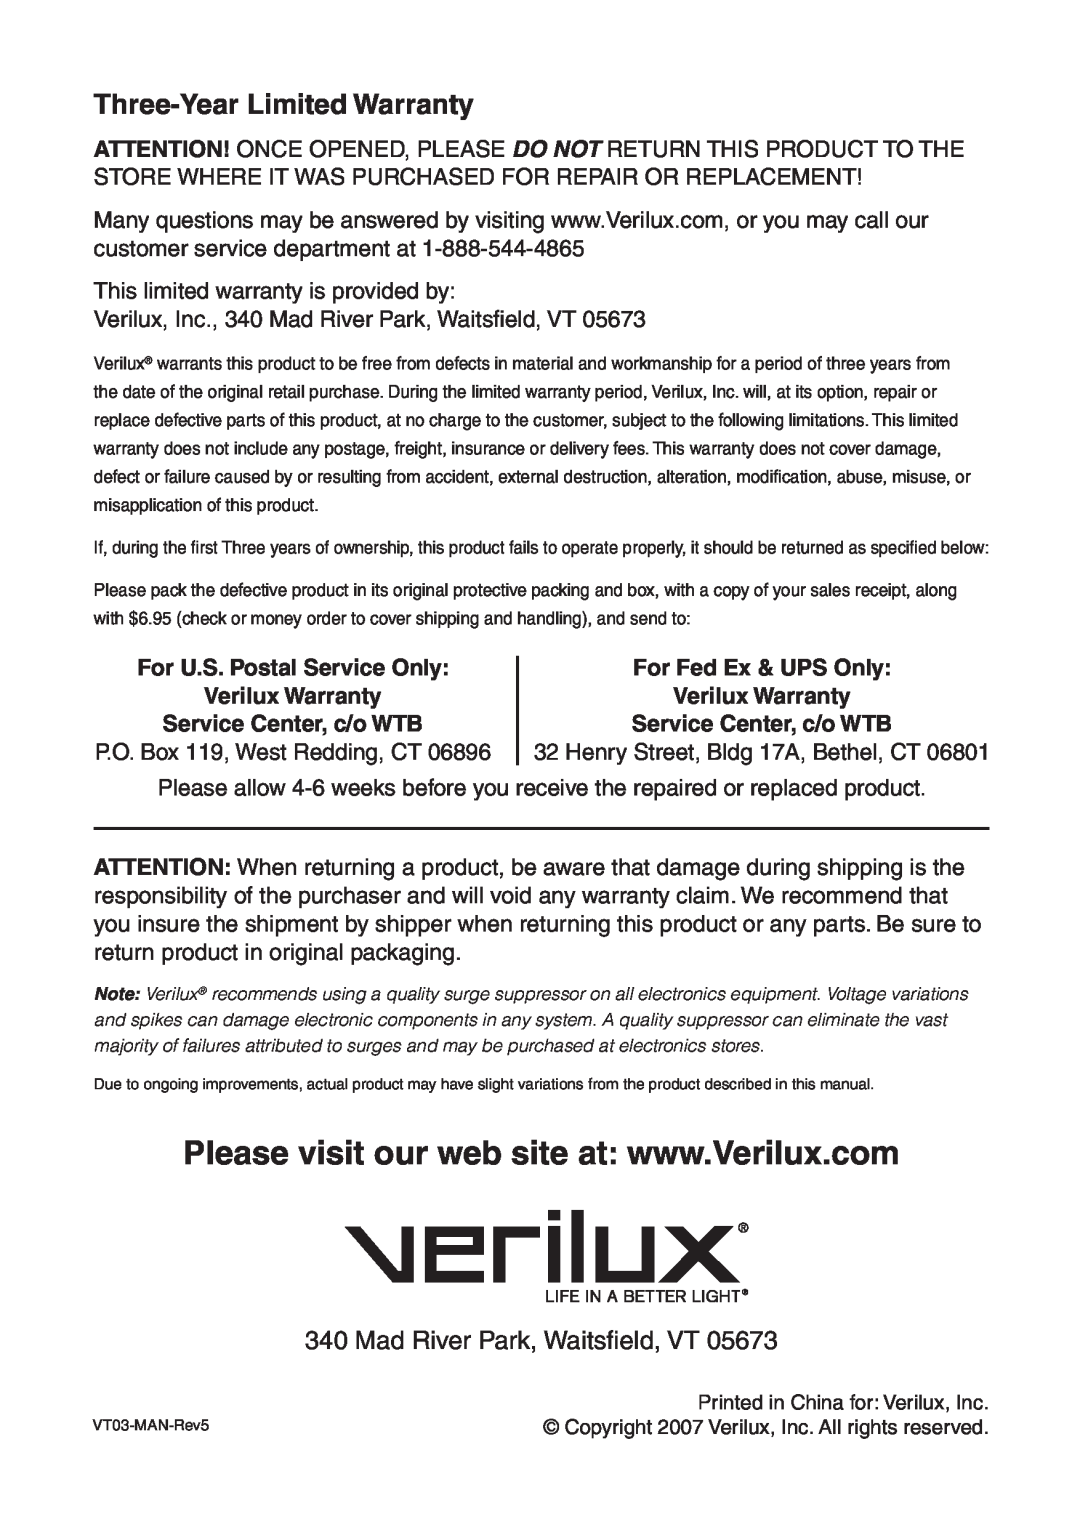 Verilux VT03 Three-YearLimited Warranty, Mad River Park, Waitsﬁeld, VT, For U.S. Postal Service Only Verilux Warranty 